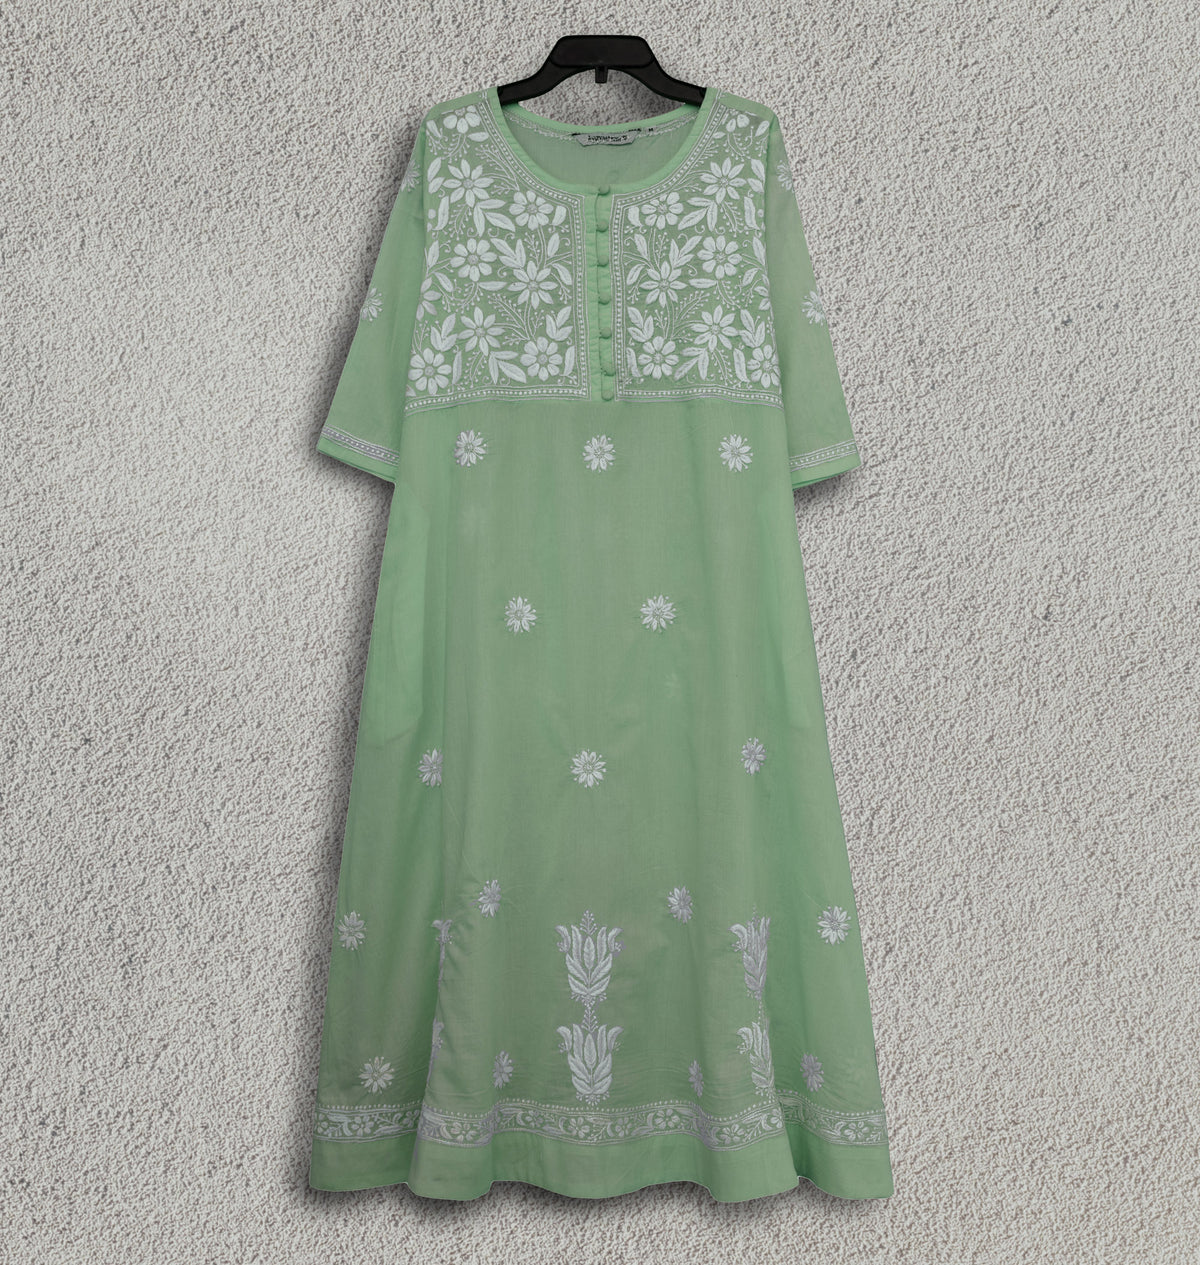 CHANDANI Pure Cotton Hand Embroidered A Line Tunic Dress Kurta: Made to Order/Customizable